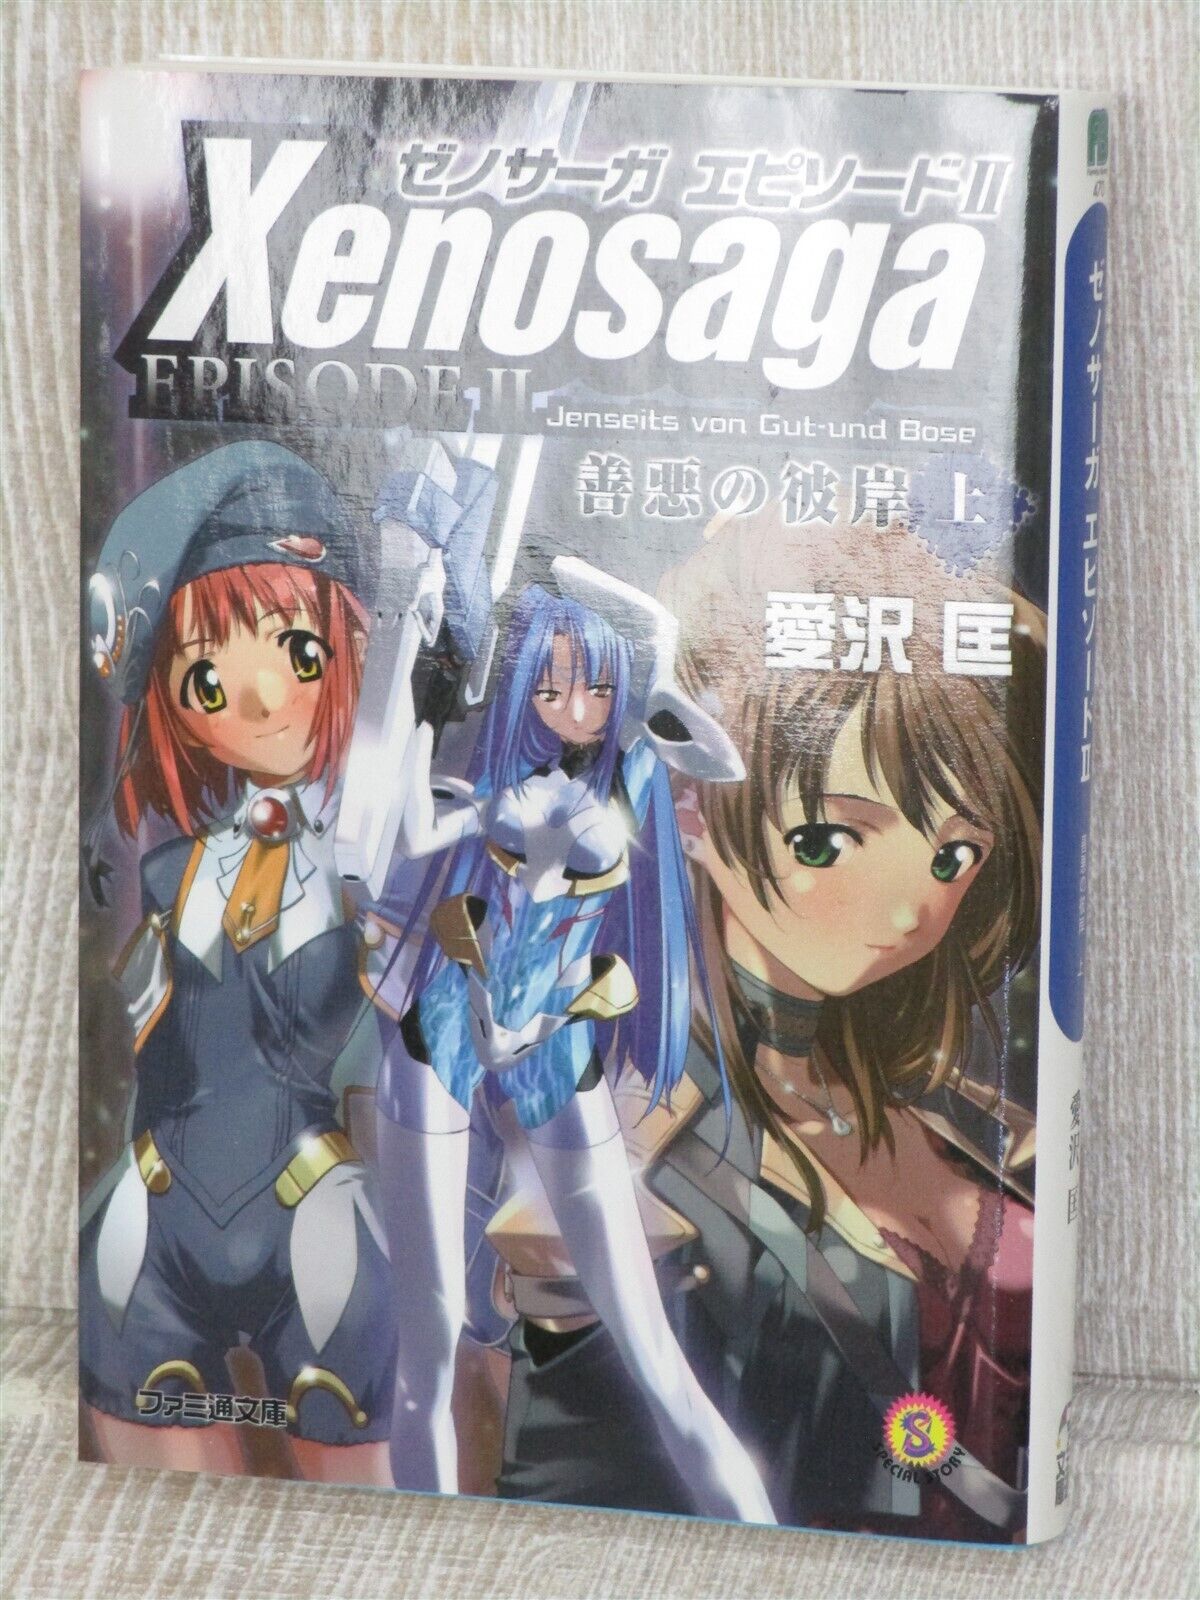 XENOSAGA Episode II 2 Novel w/Poster TADASHI AIZAWA PS2 Japan Fan Book 2004 EB